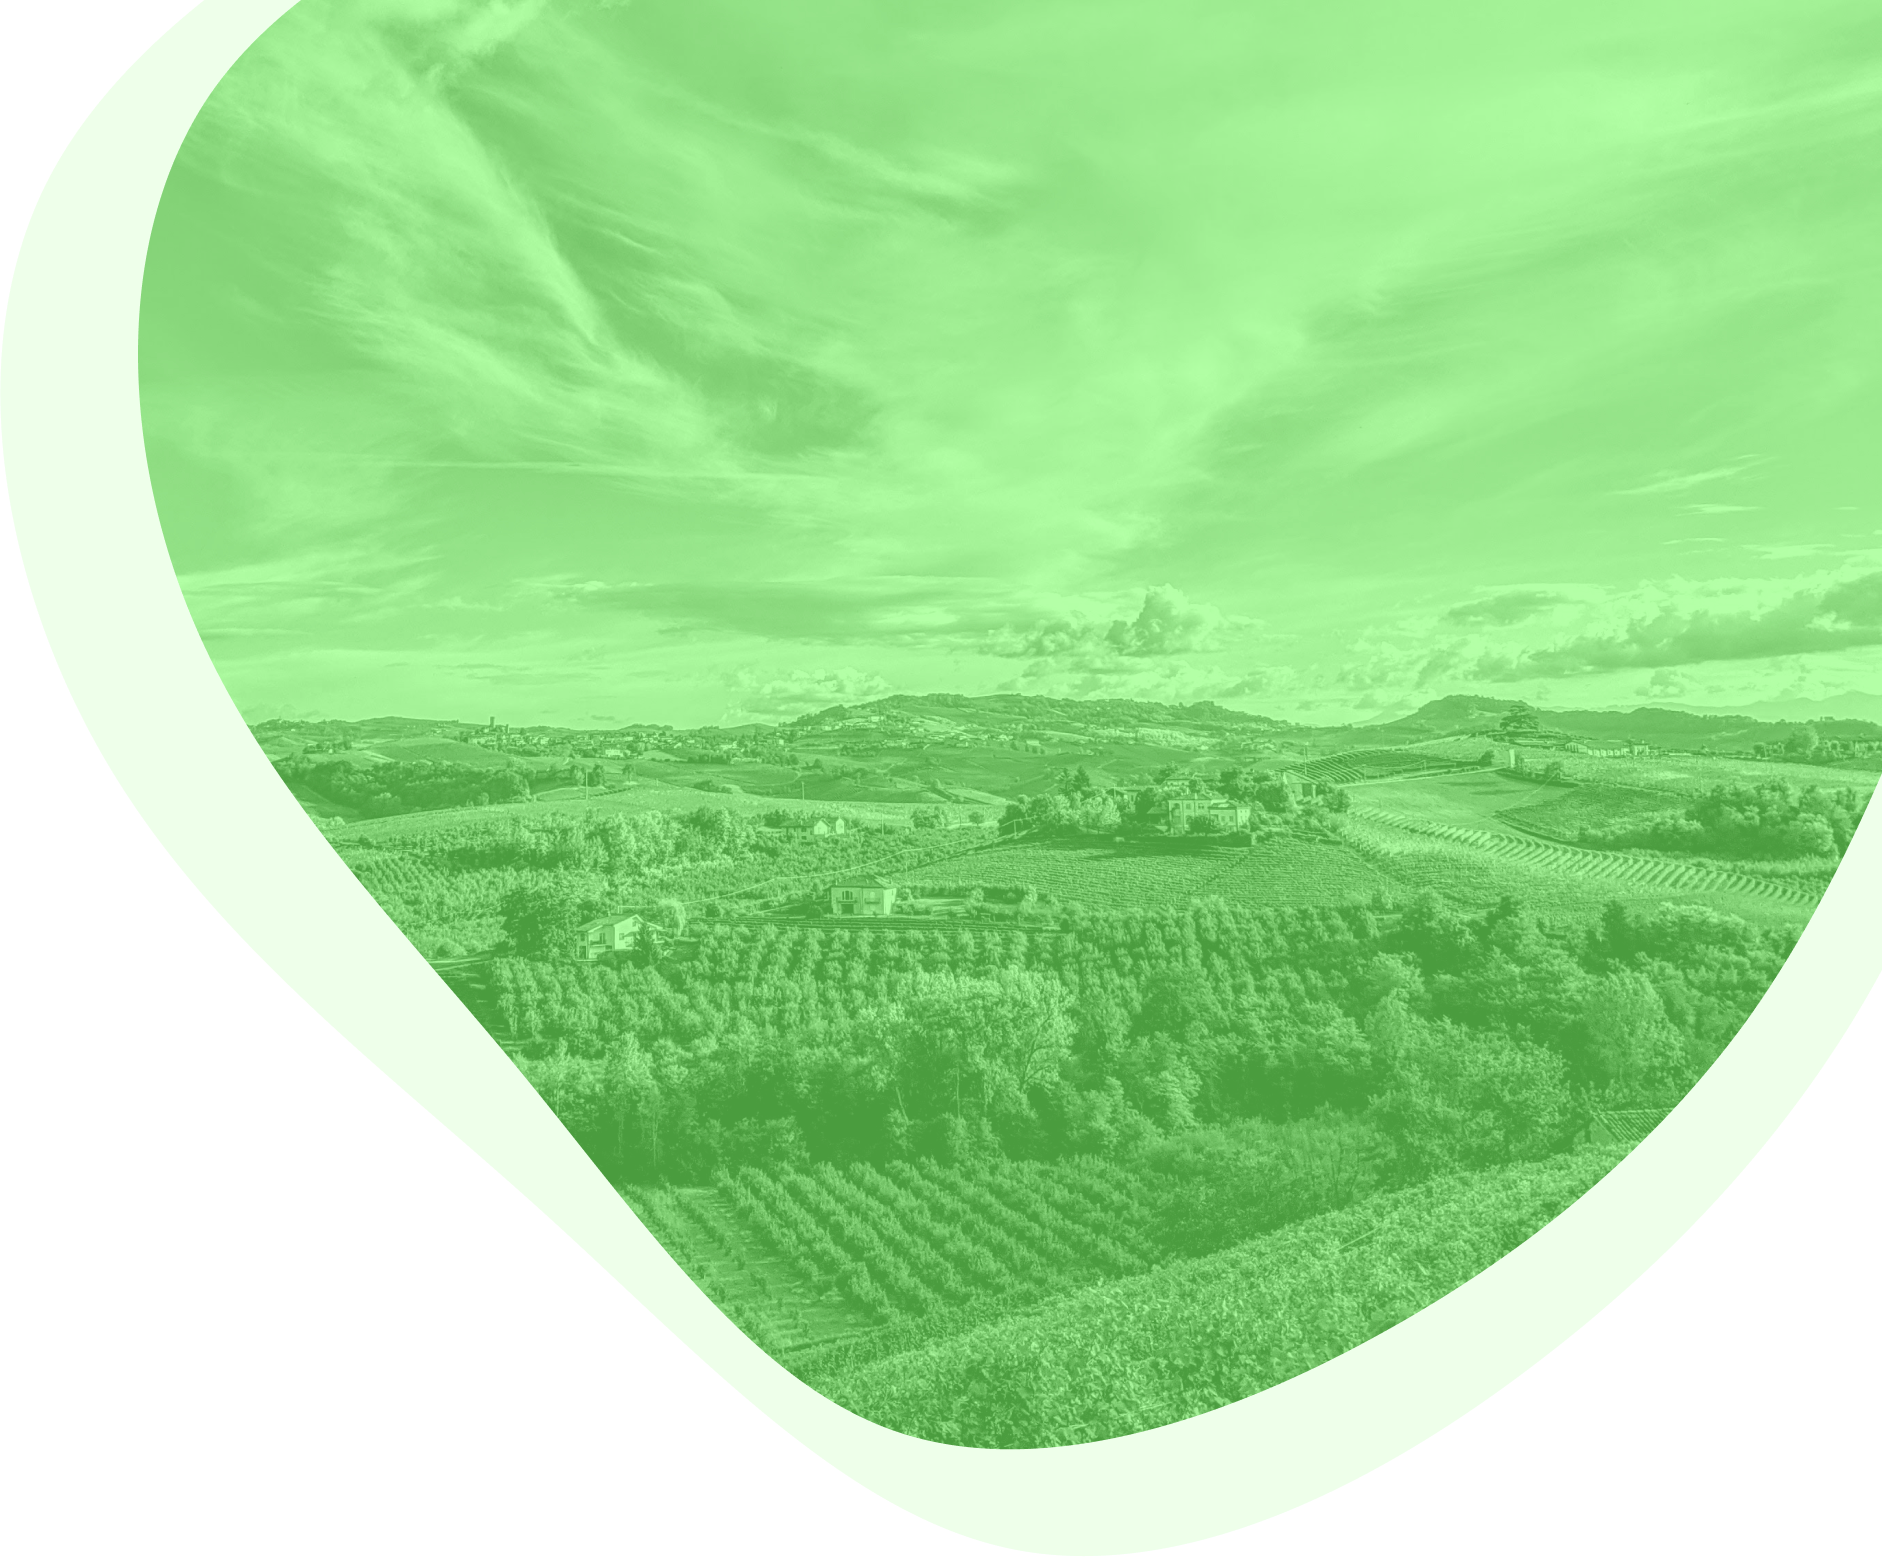 Italian hills with vineyards